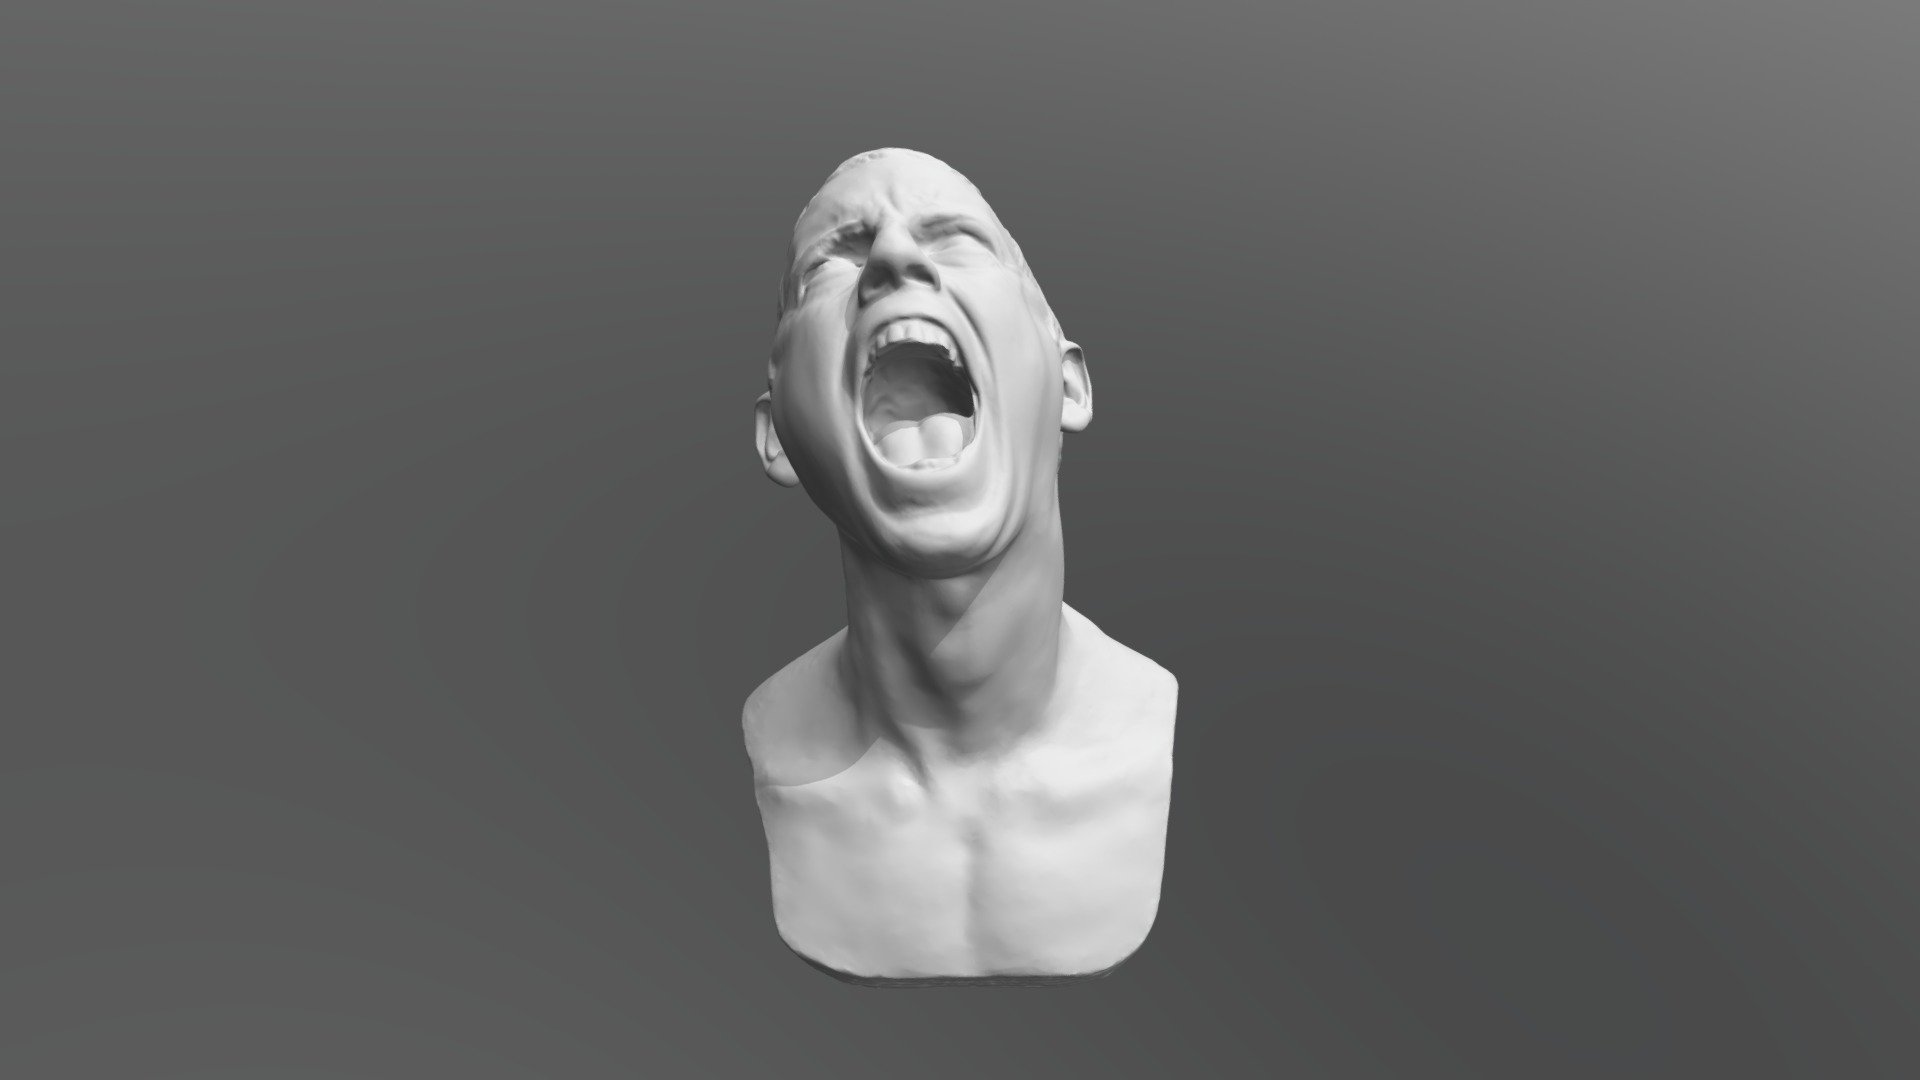 A 3D model of The Stolen Scream by Noam Galai - The Stolen Scream - 3D model by noamgalai 3d model